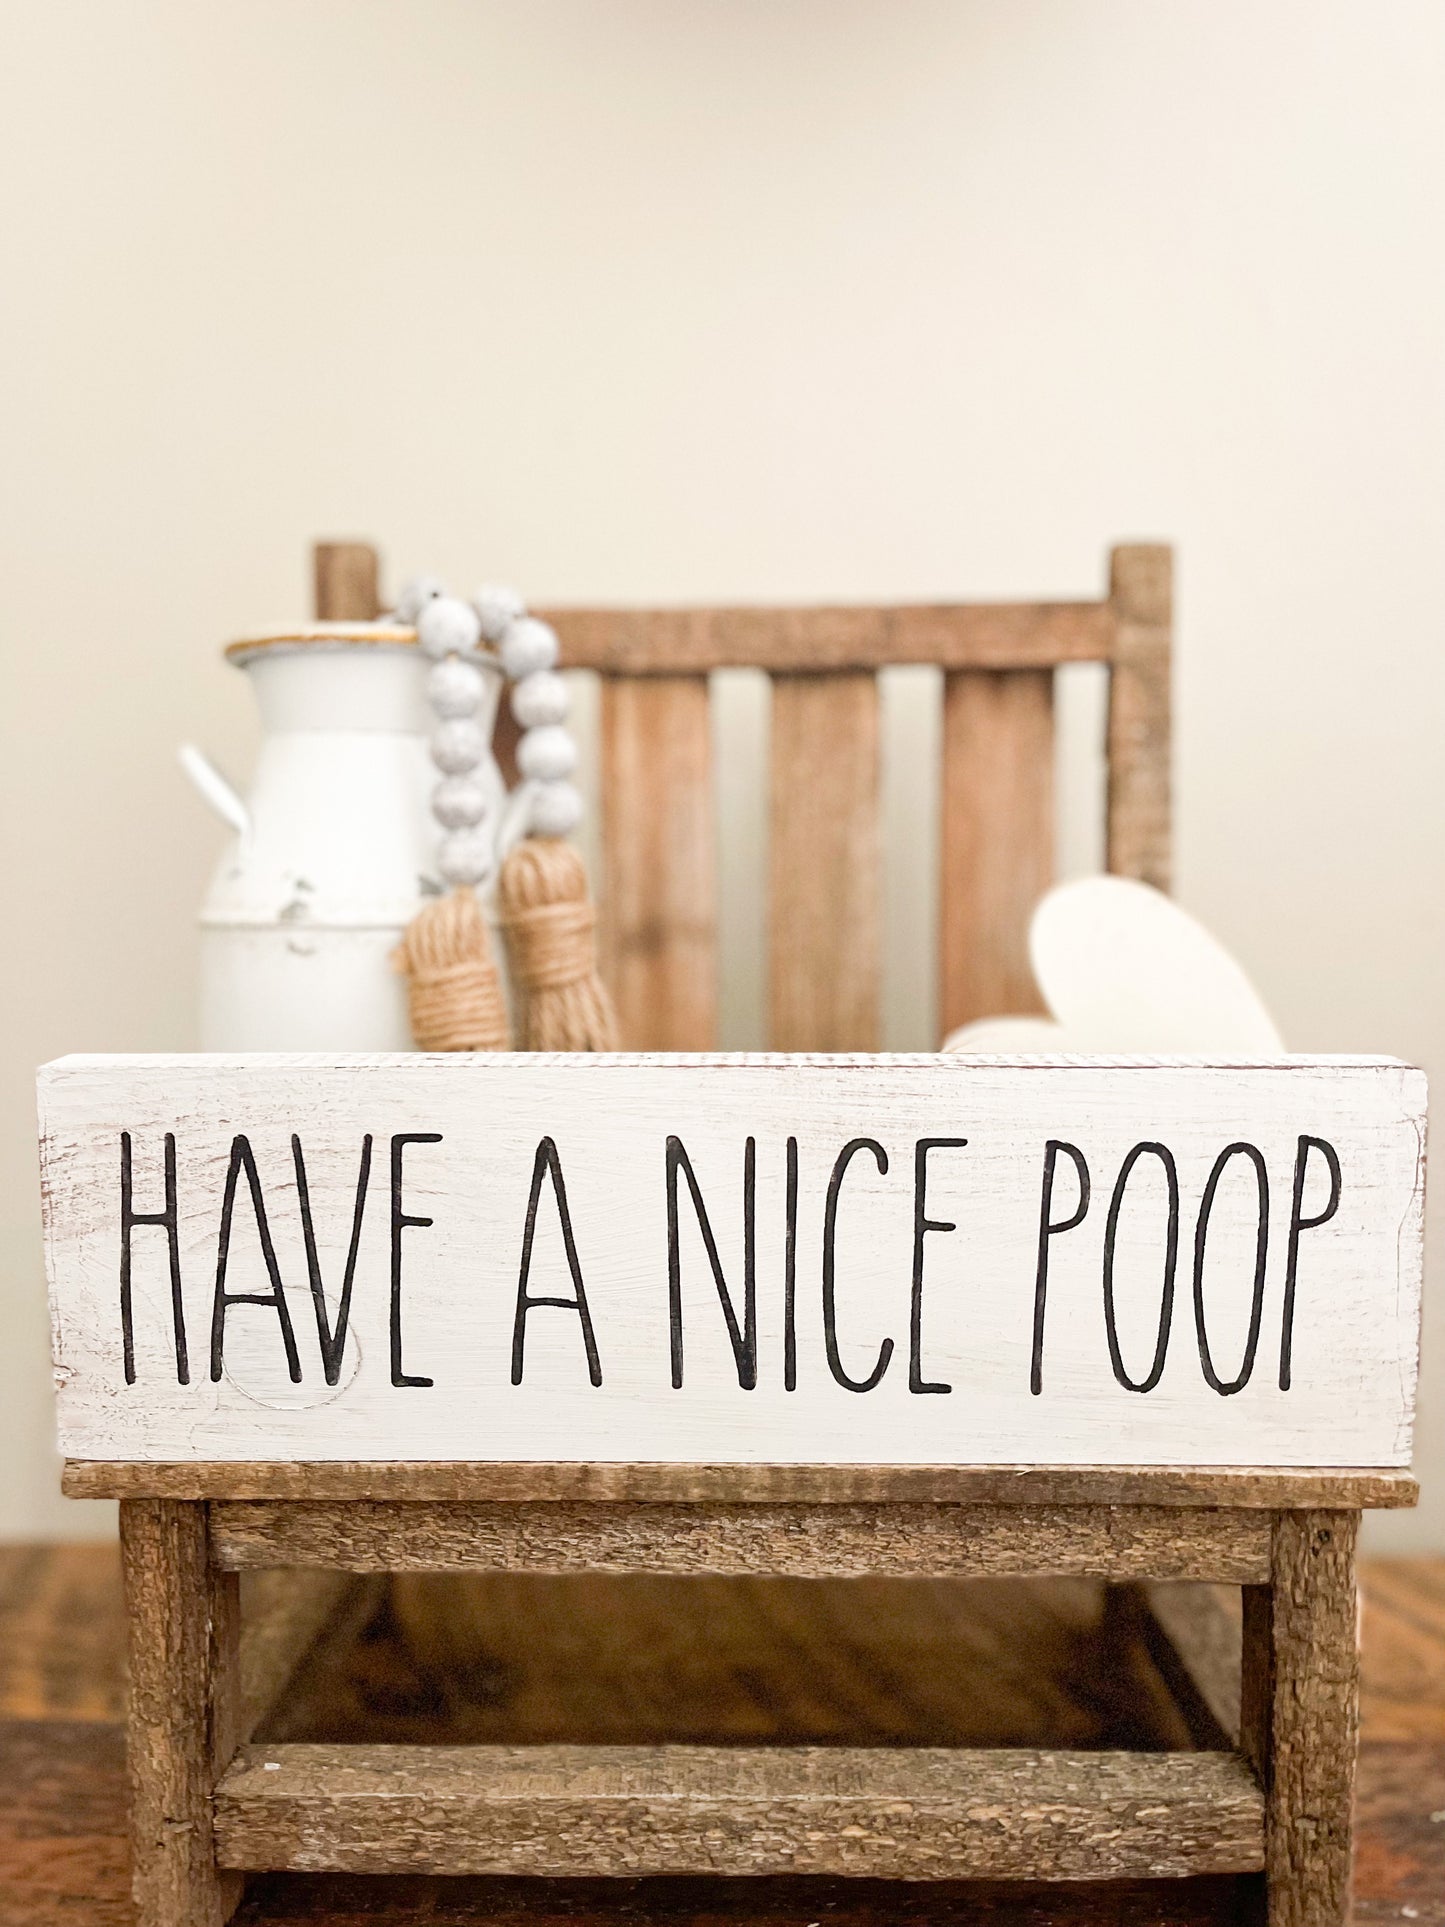 Have a nice poop sign